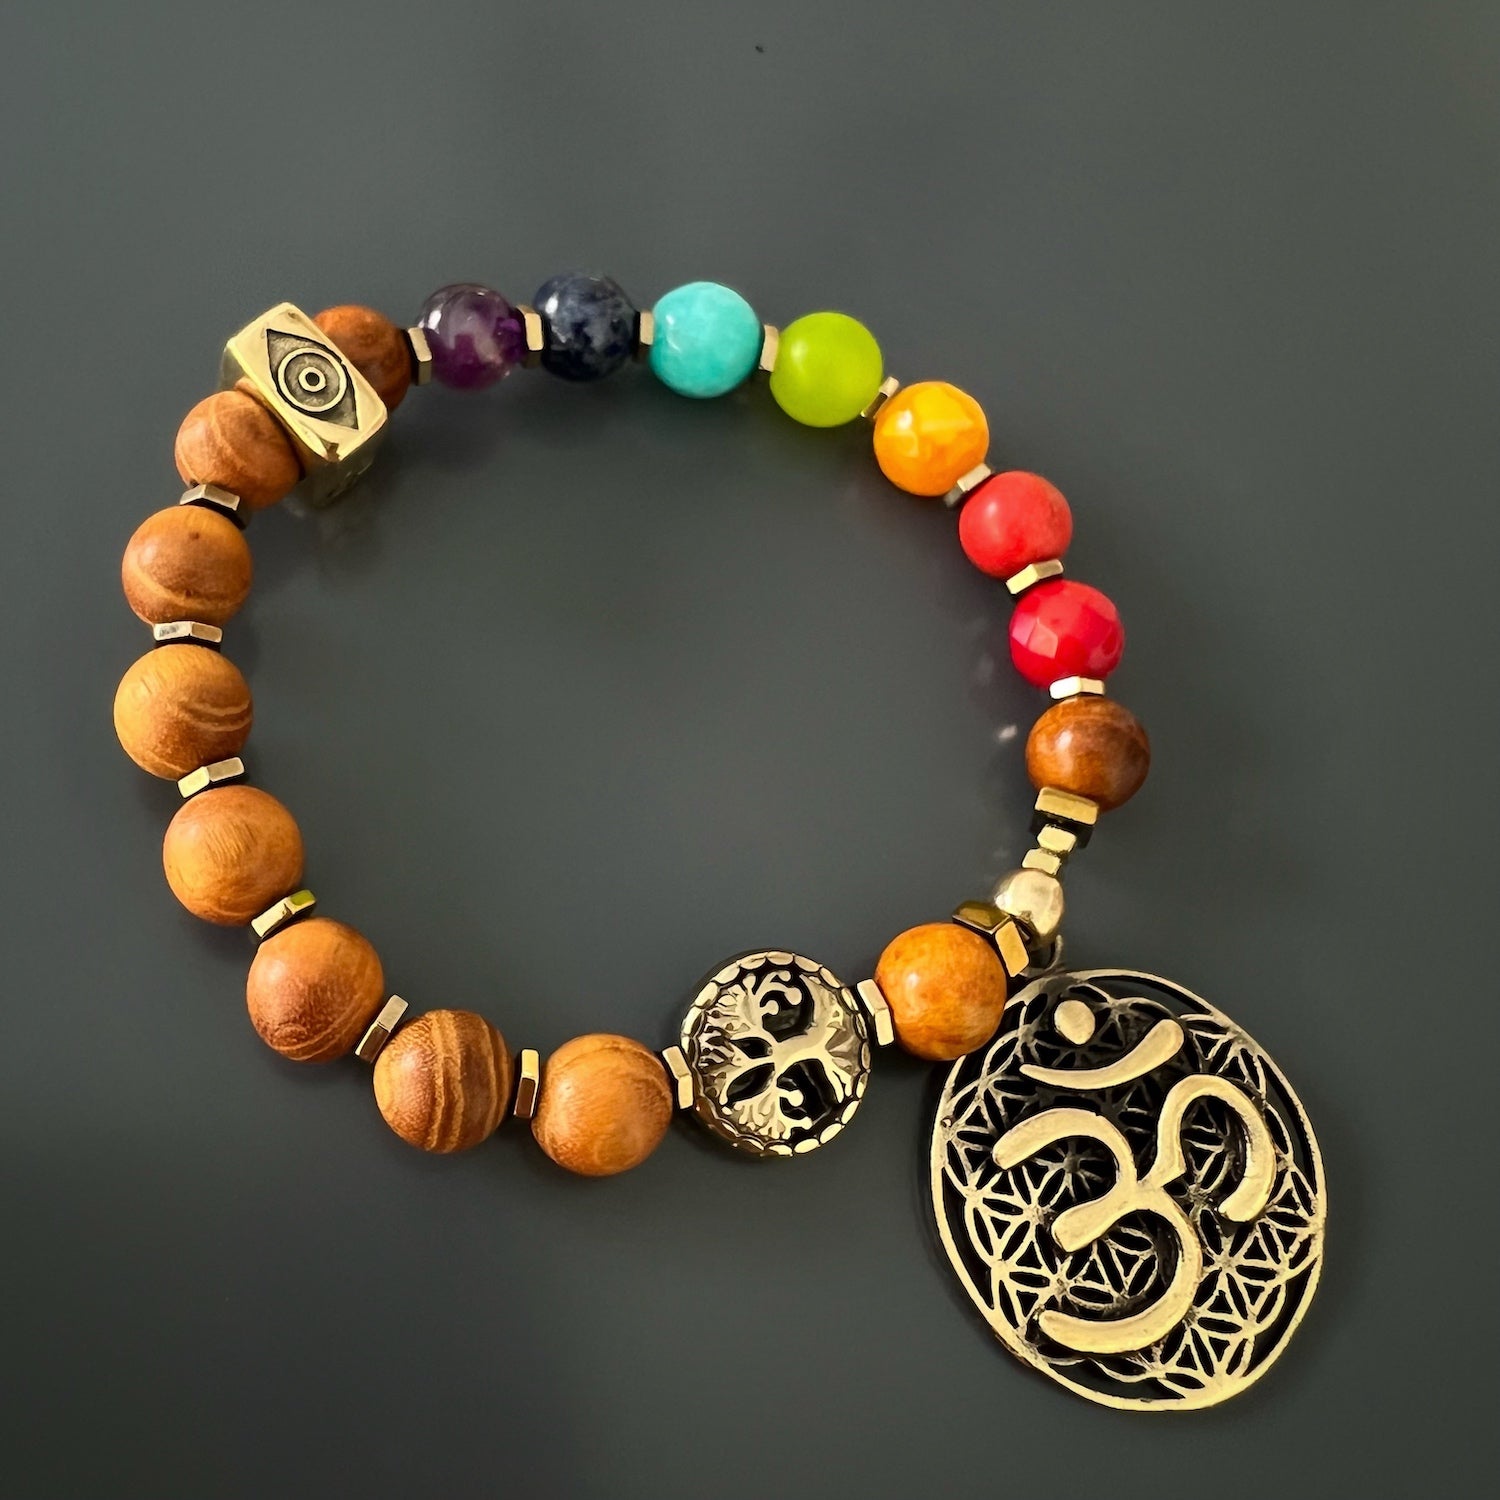 Chakra Mini Mala Talisman Bracelet adorned with healing crystals and sacred symbols.